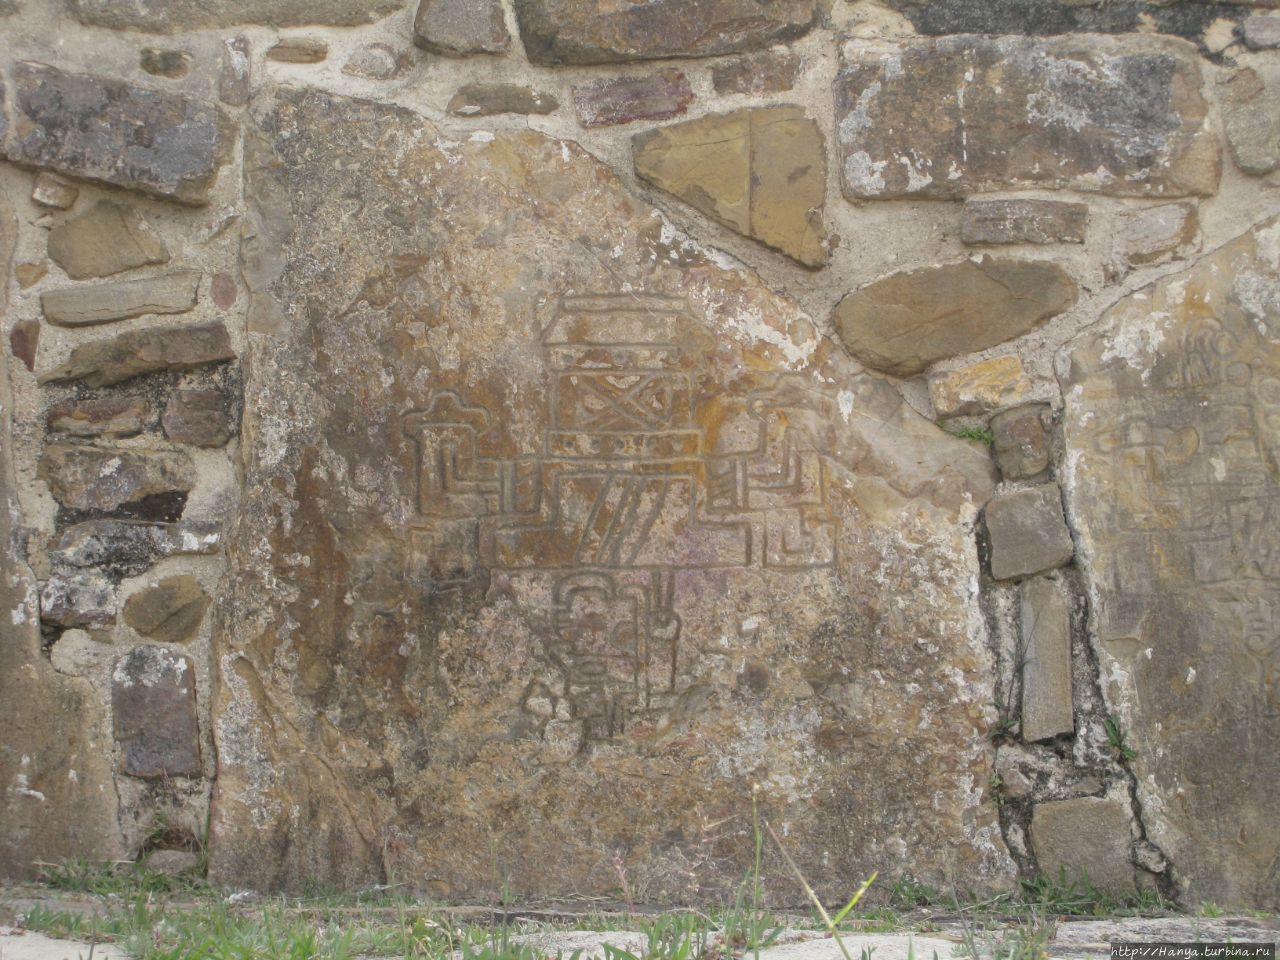 Монте-Альбан древний город индейцев — сапотеков Оахака, Мексика